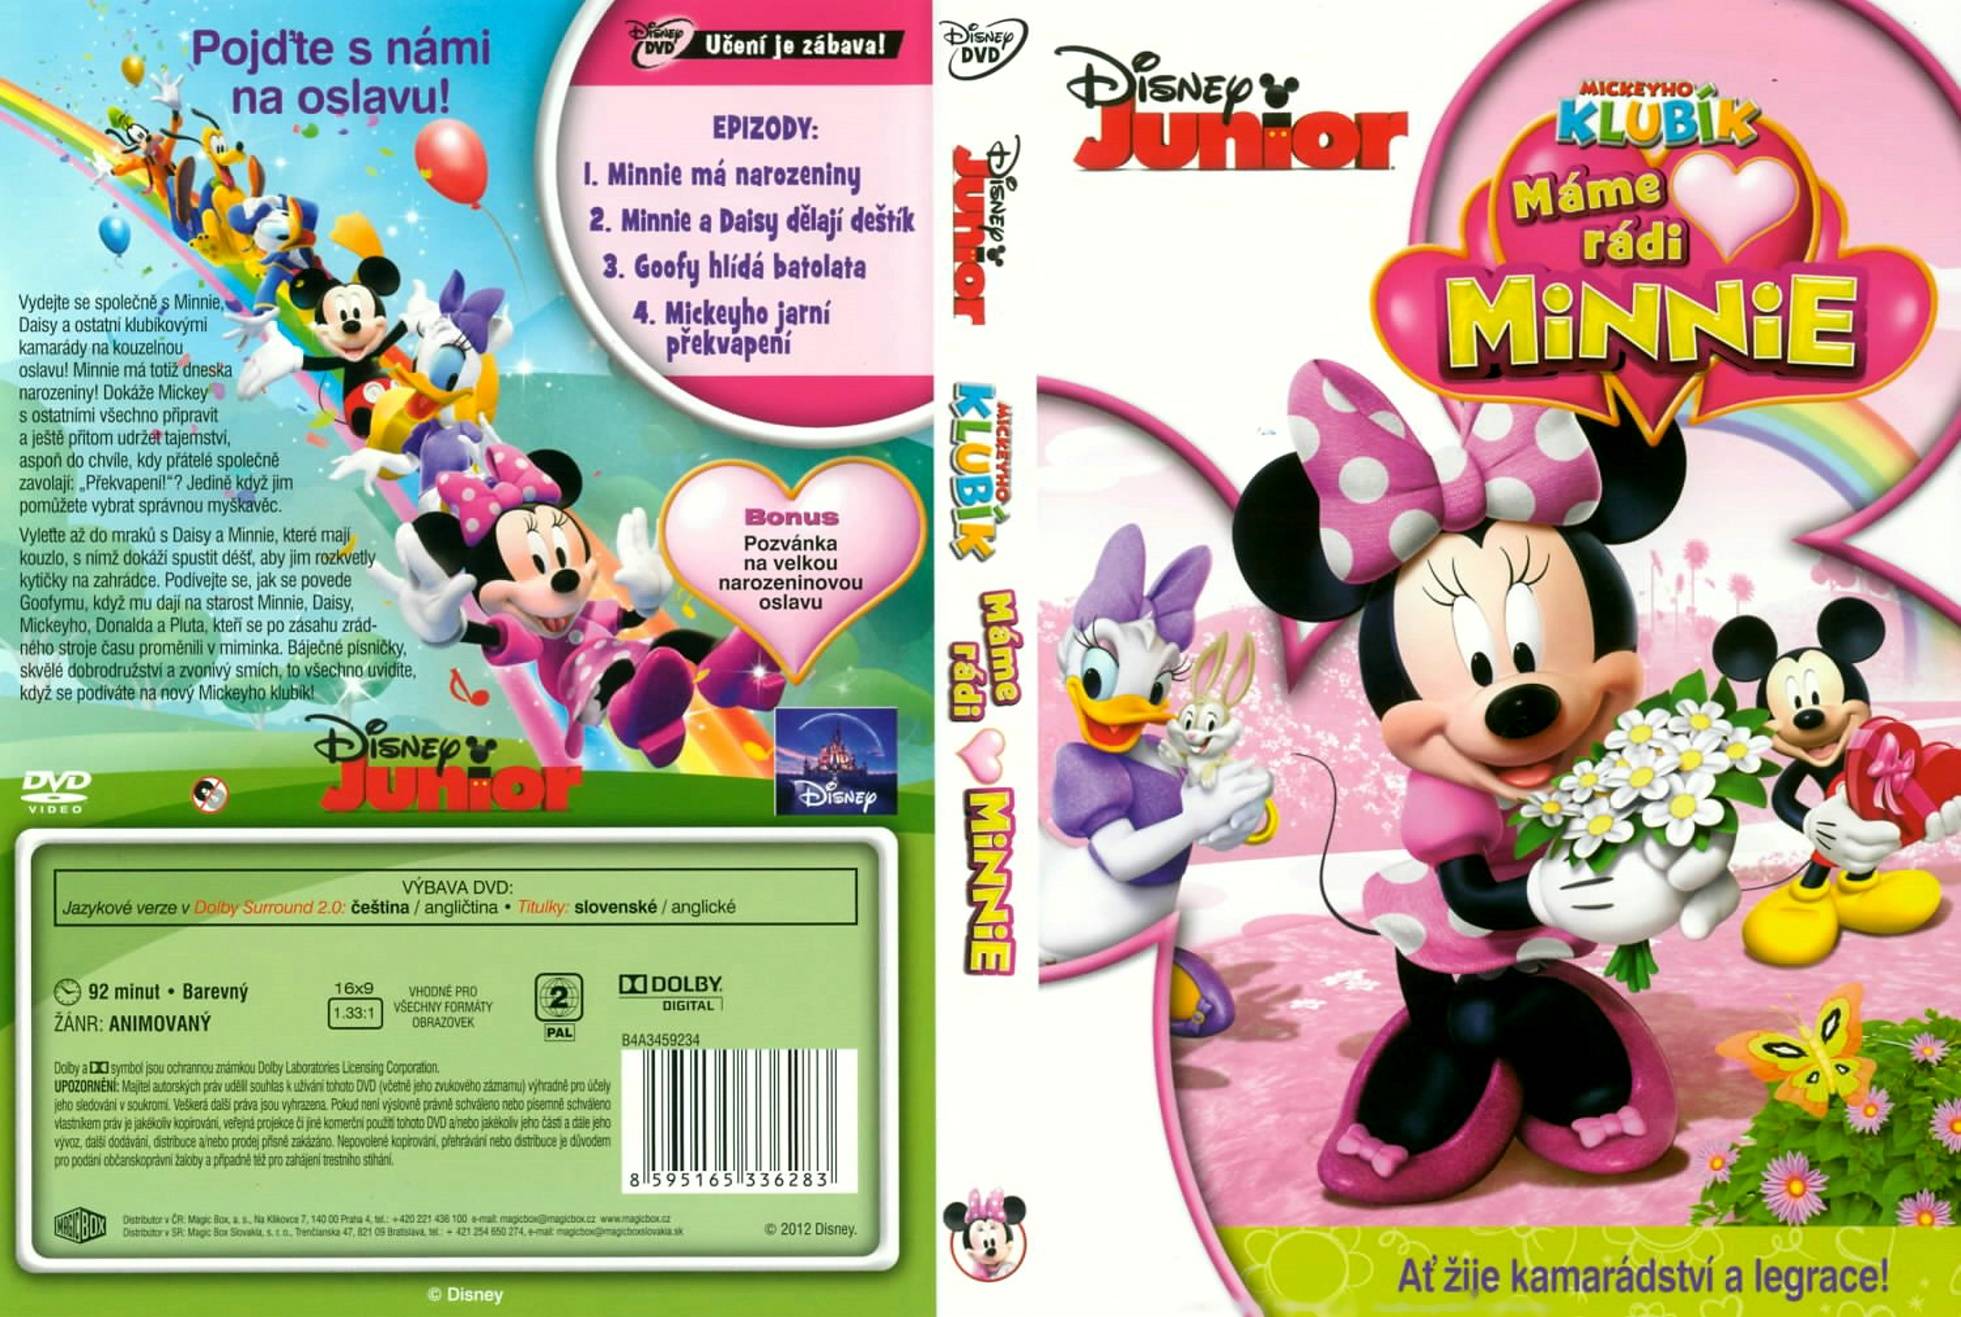 Mickey mouse clubhouse pop star minnie dvd menu